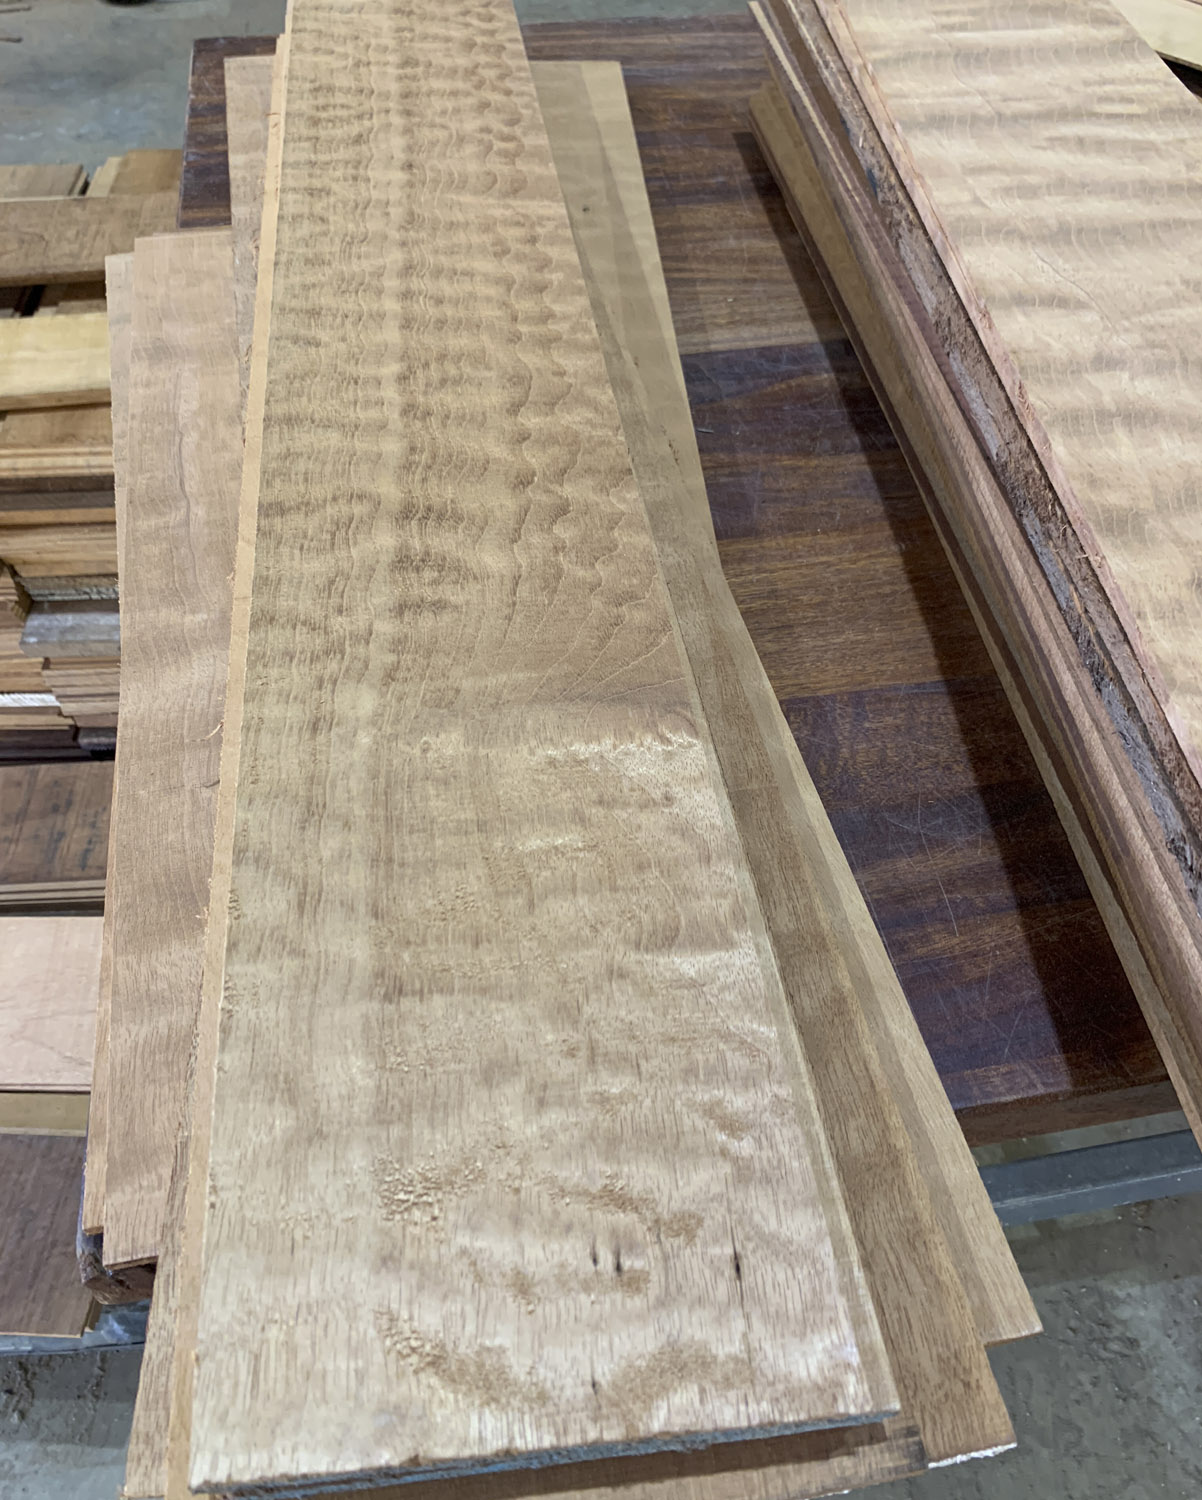 Honduran Mahogany Thin Stock Lumber Boards Wood Crafts 1 4 x 36 at MechanicSurplus.com EWZ2334S